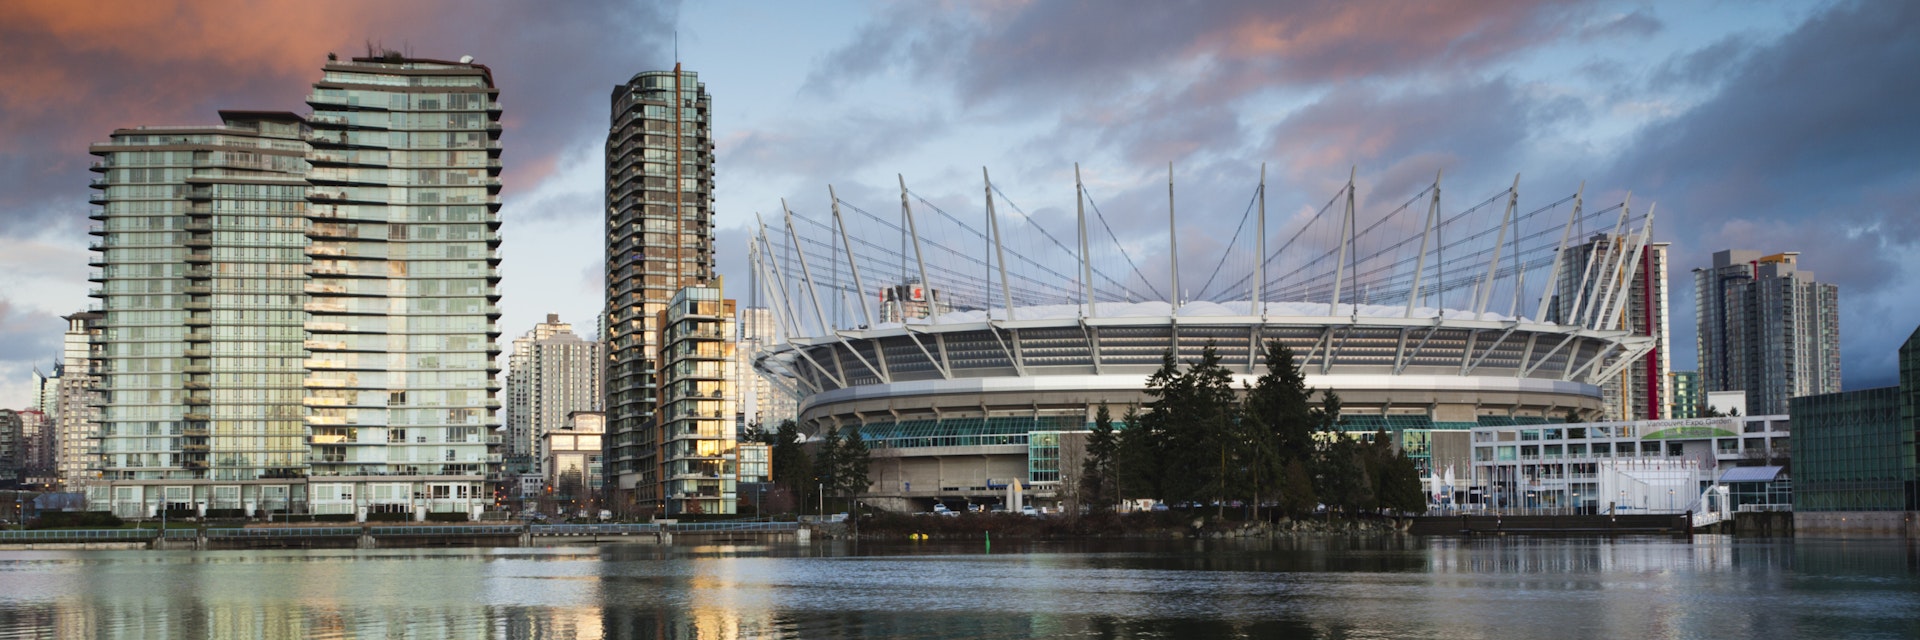 Canada, British Columbia, Vancouver, BC Place Stadium along False Creek